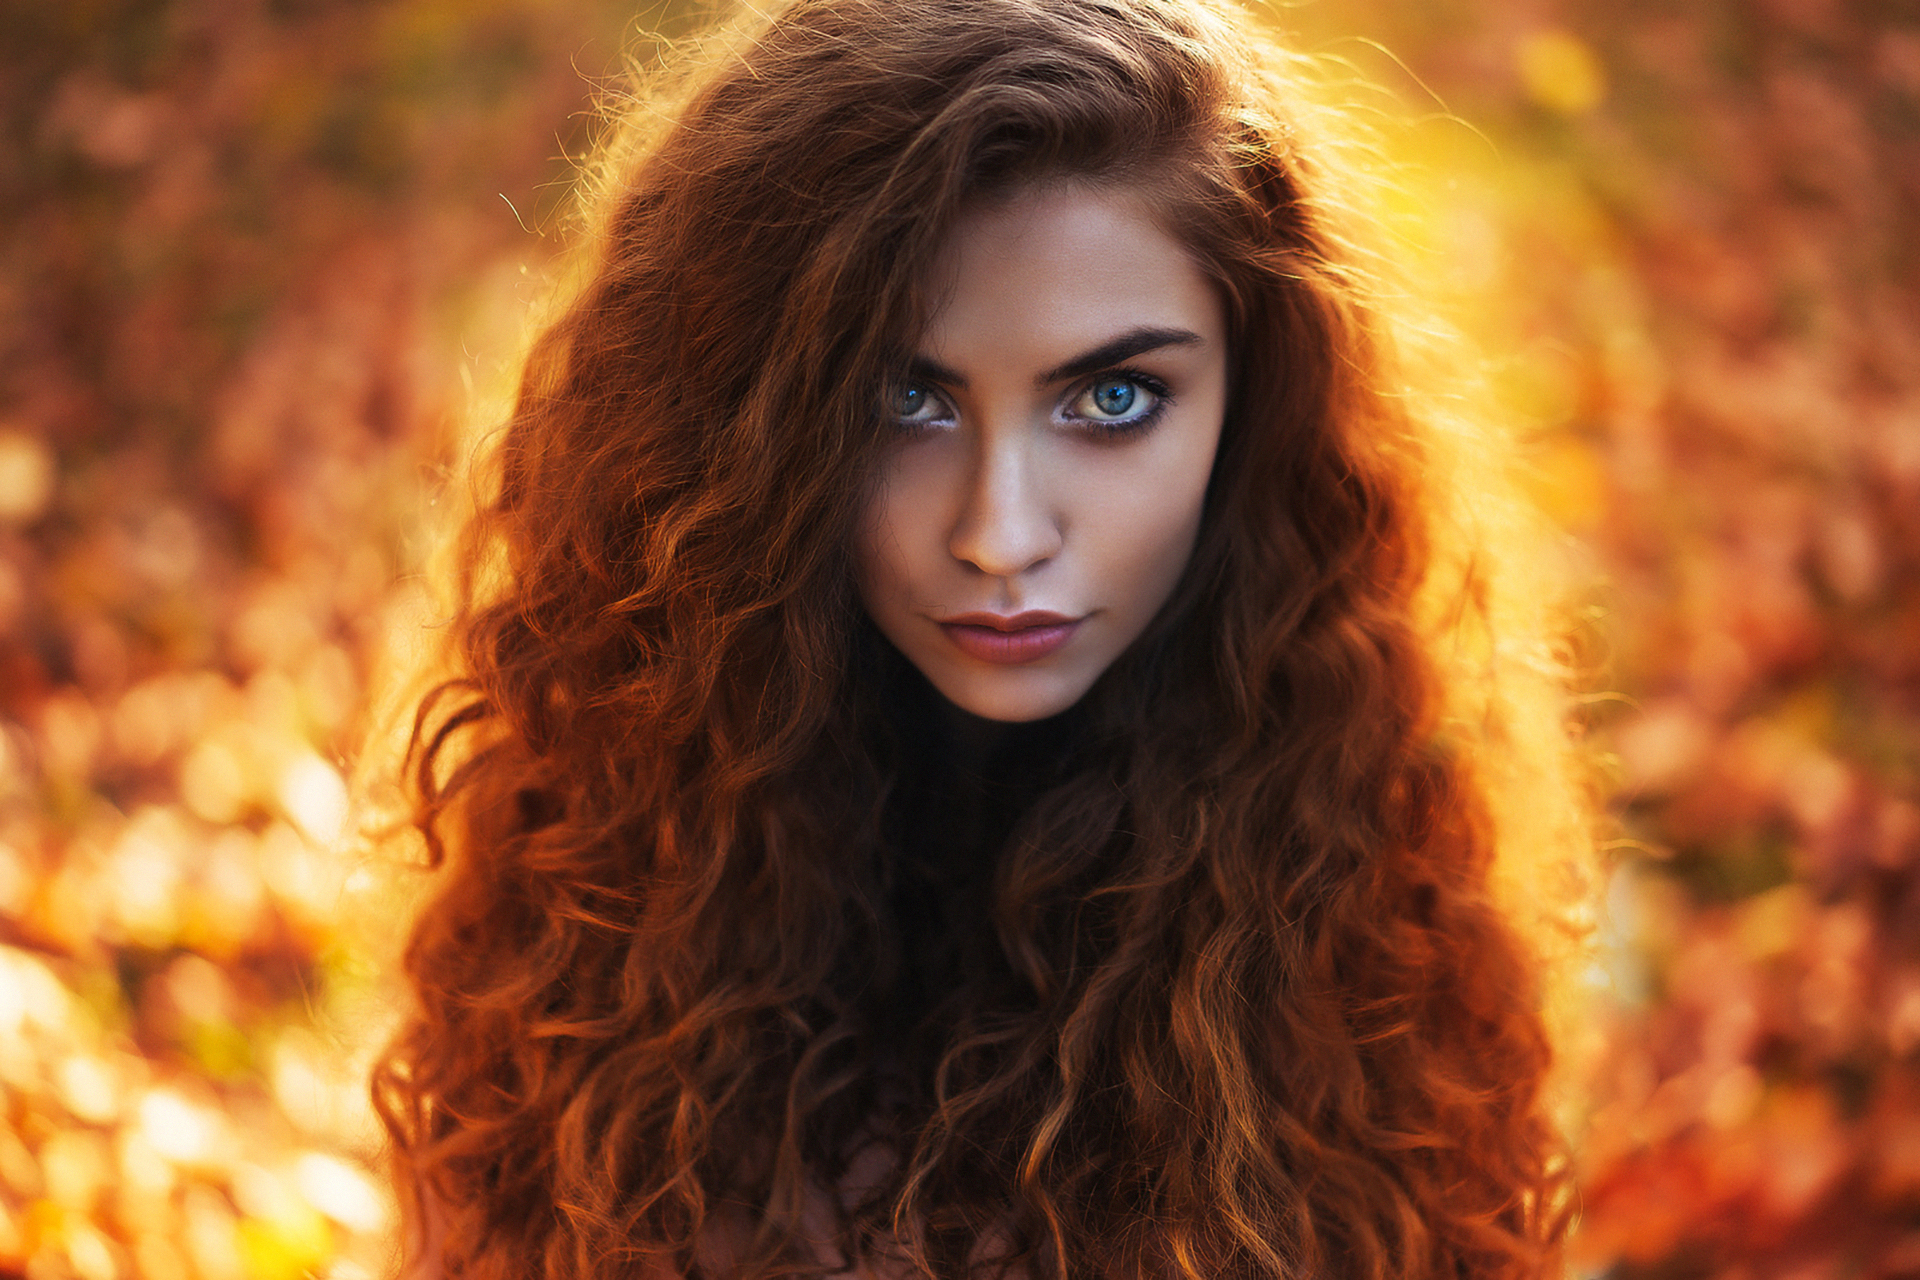 Download Bokeh Long Hair Blue Eyes Redhead Face Woman Model Hd Wallpaper By Paul Toma 1438